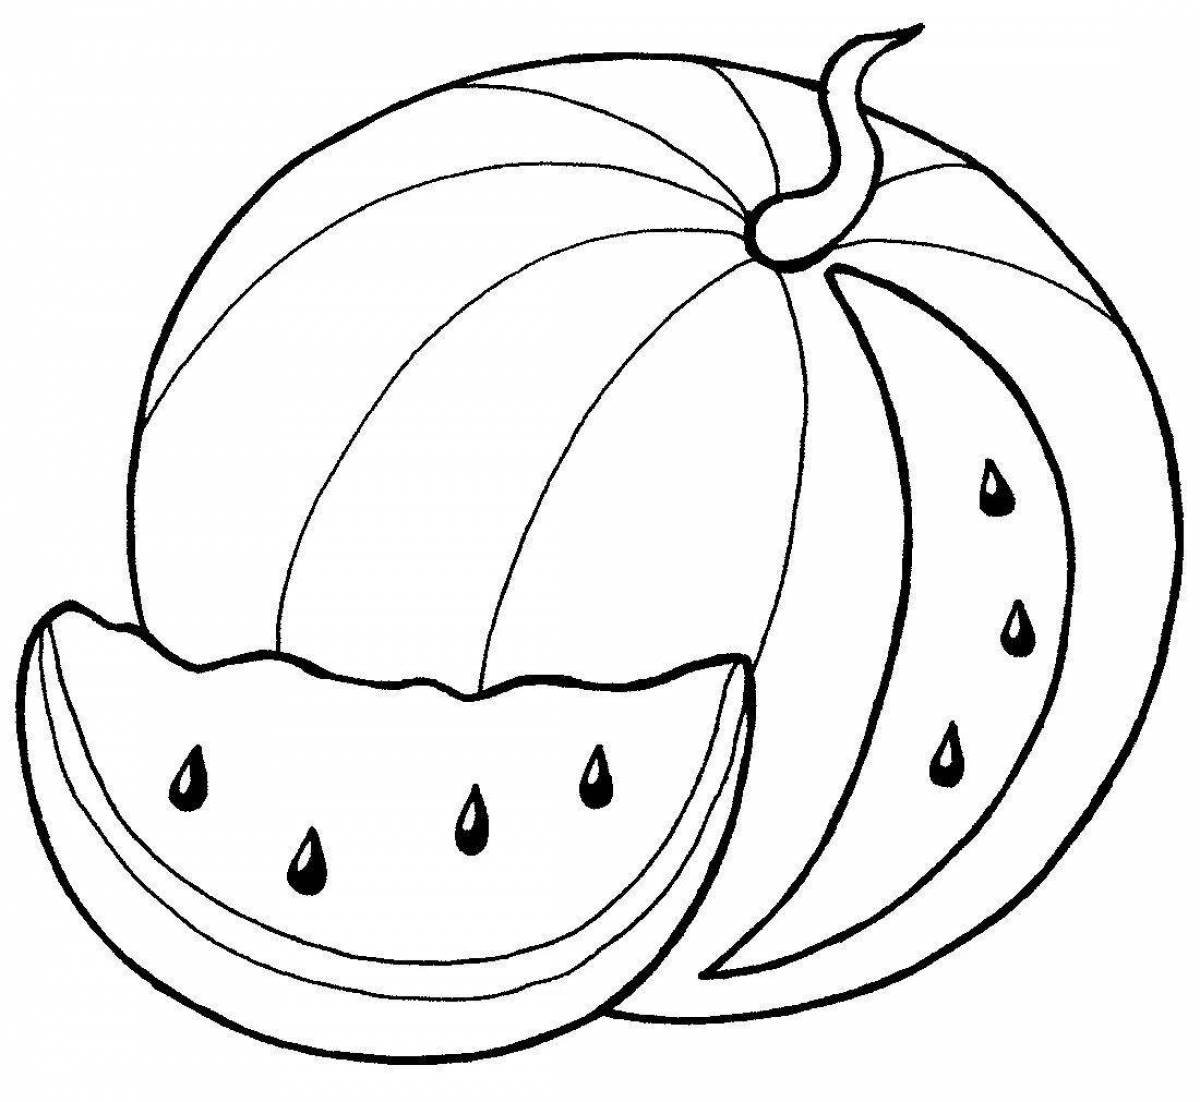 Буйный рисунок арбуза